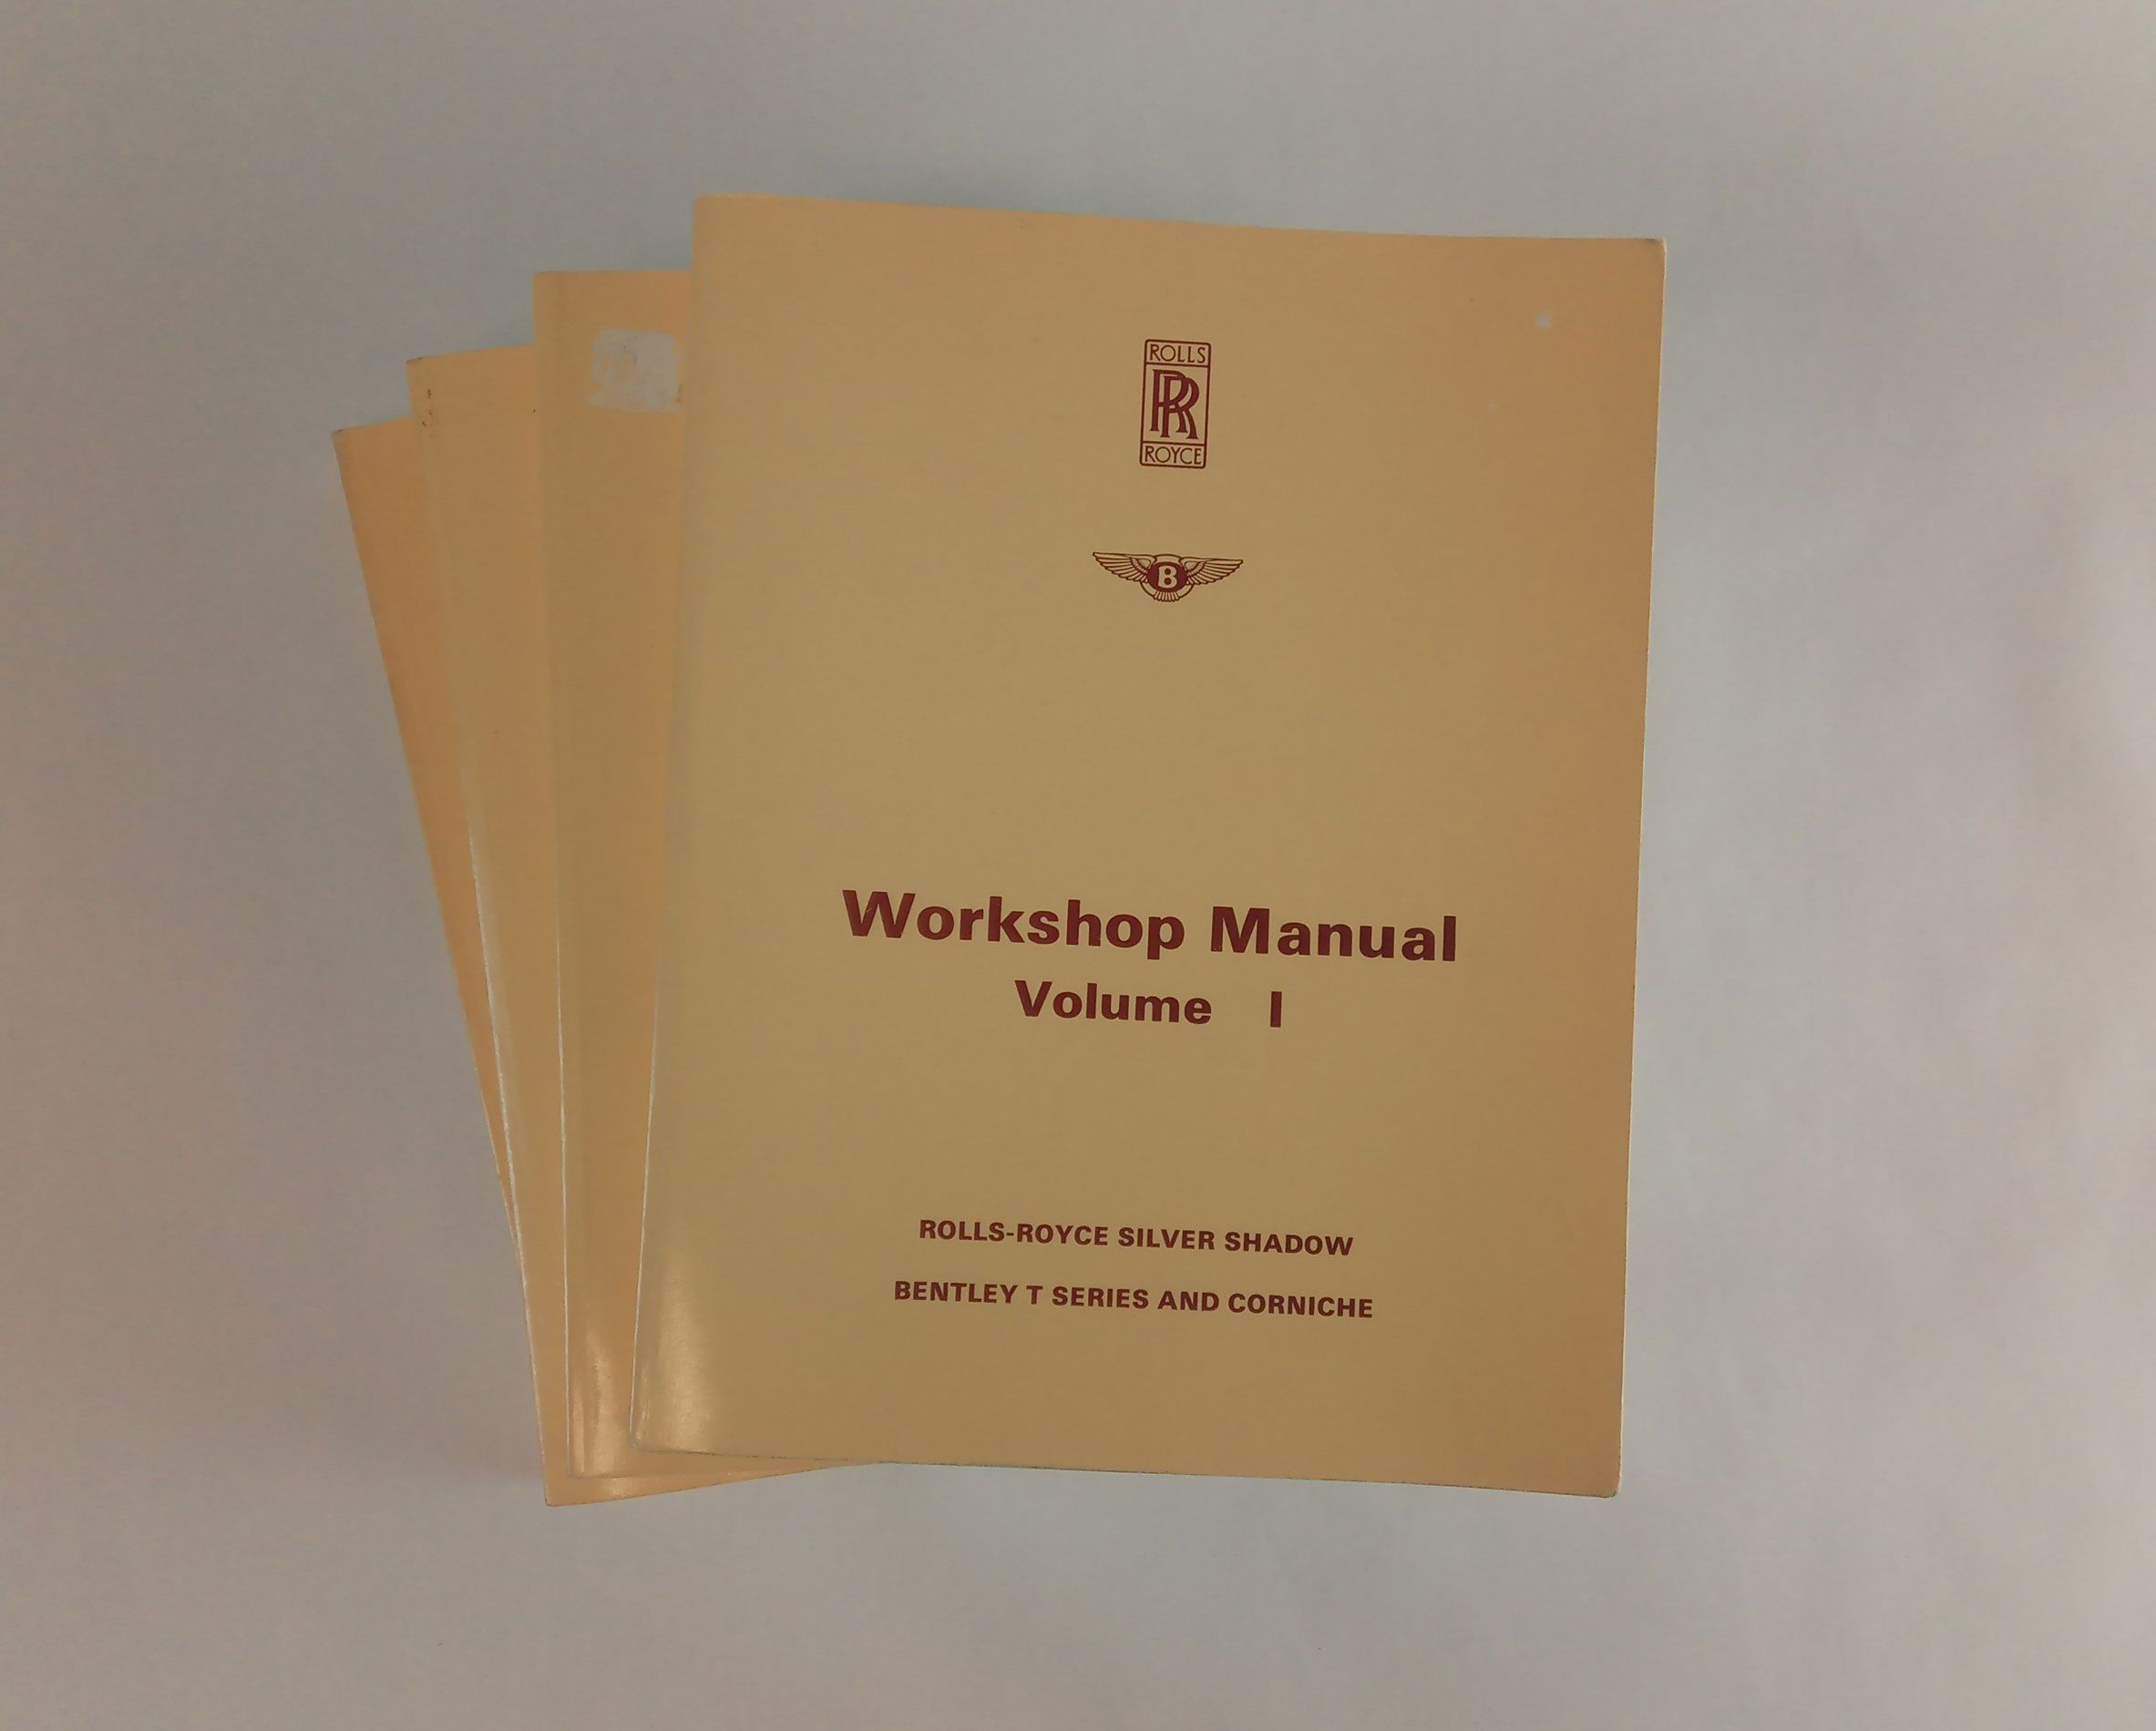  Workshop Manuals " Rolls-Royce Silver Shadow, Bentley T Series and Corniche" Volumes 1-4,...